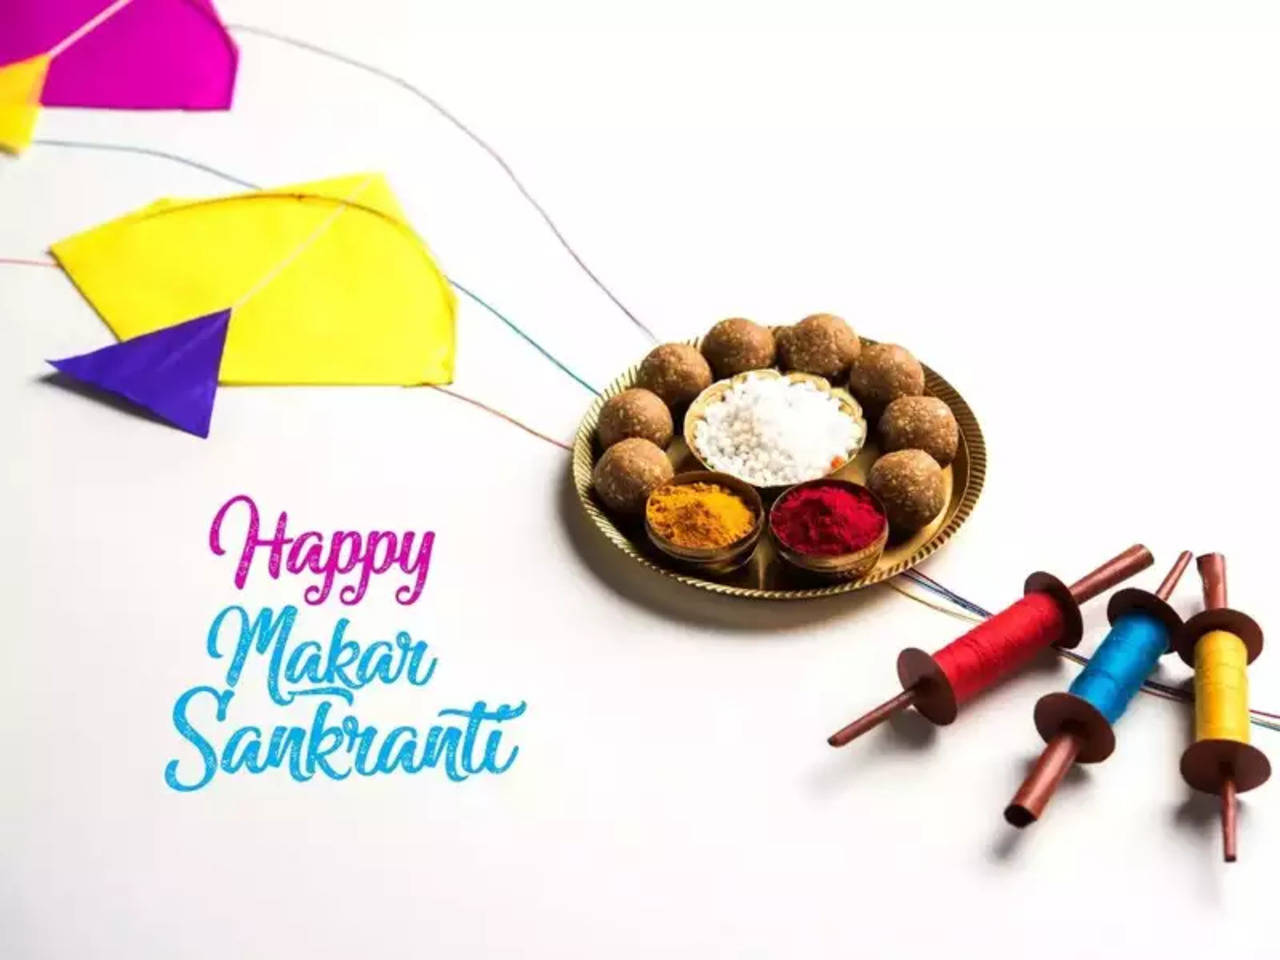 15+] Happy Makar Sankranti Wallpapers in HD FREE Download